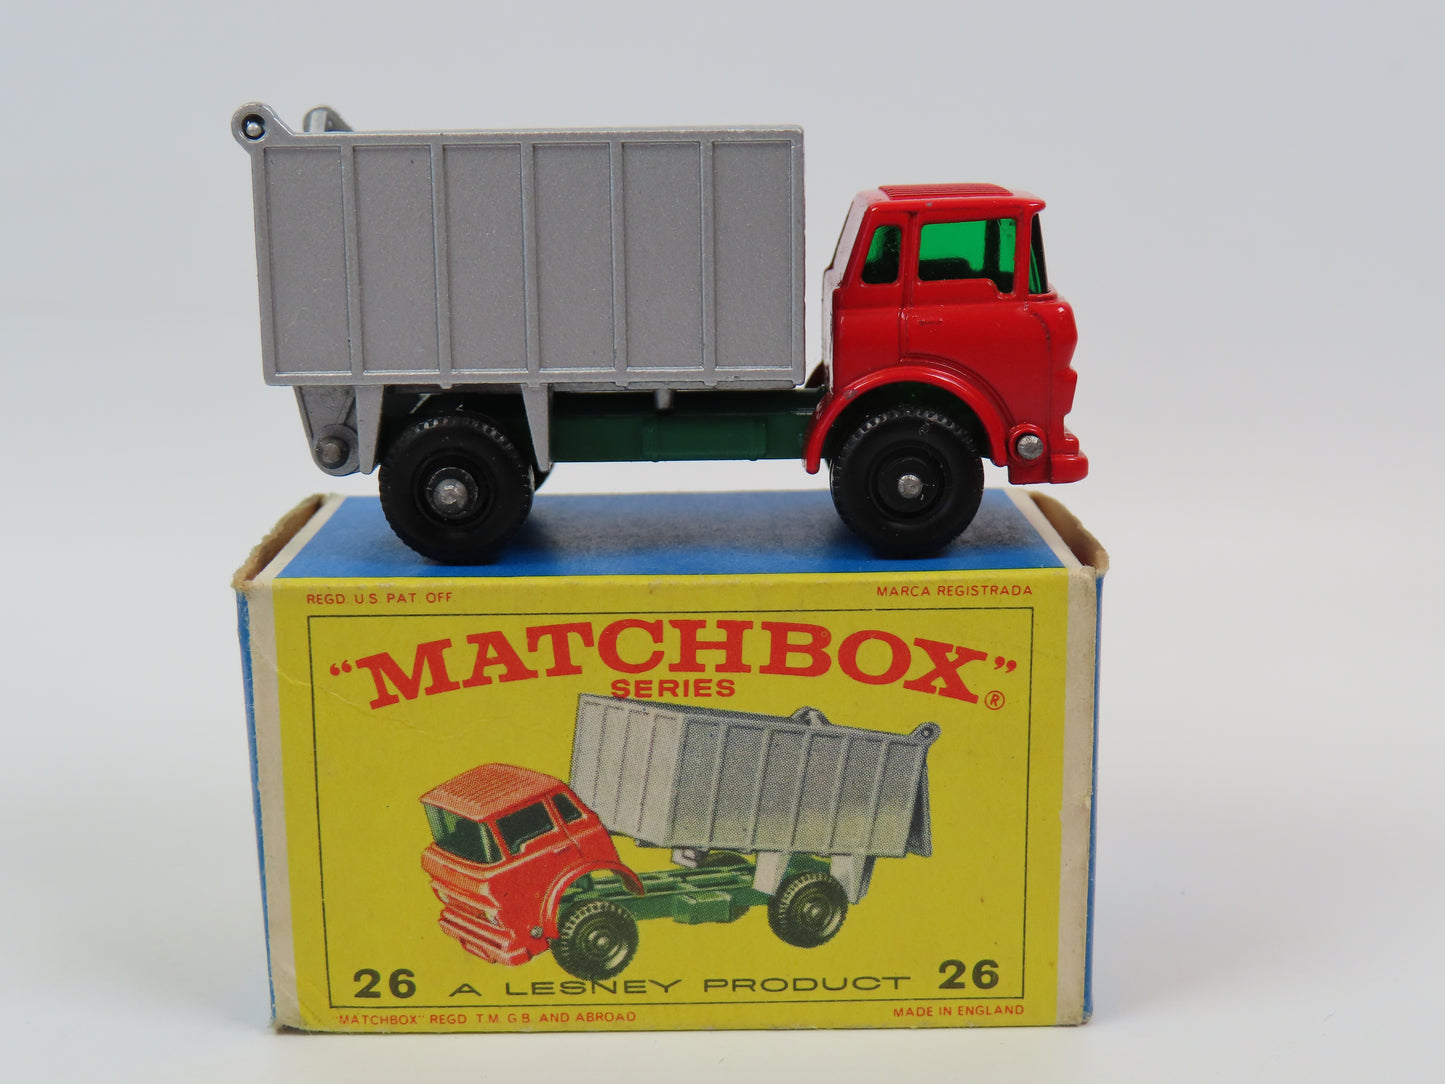 Matchbox 26 G.M.C. Tipper Truck, Very Near MInt/Boxed!